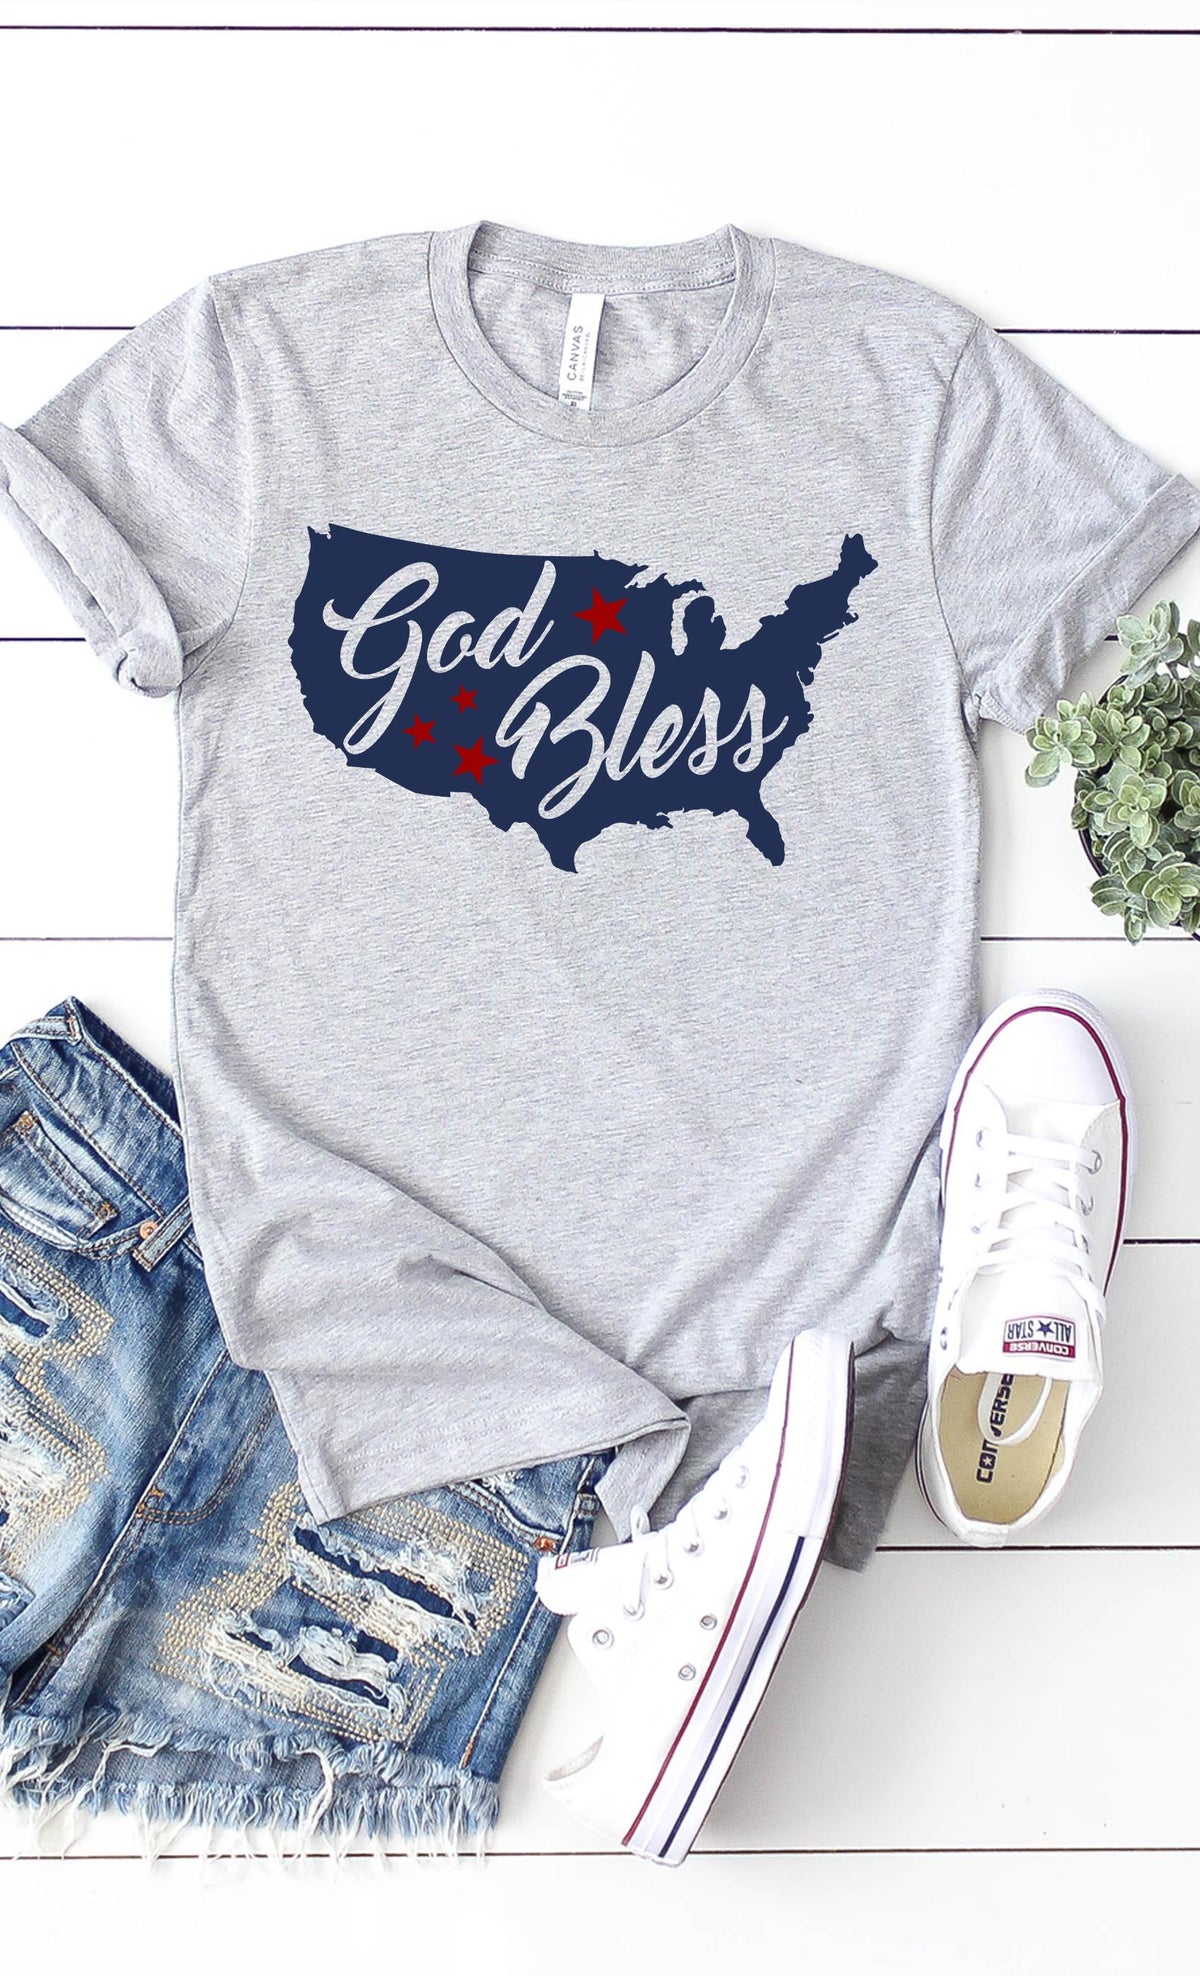 Dios bendiga camiseta gráfica